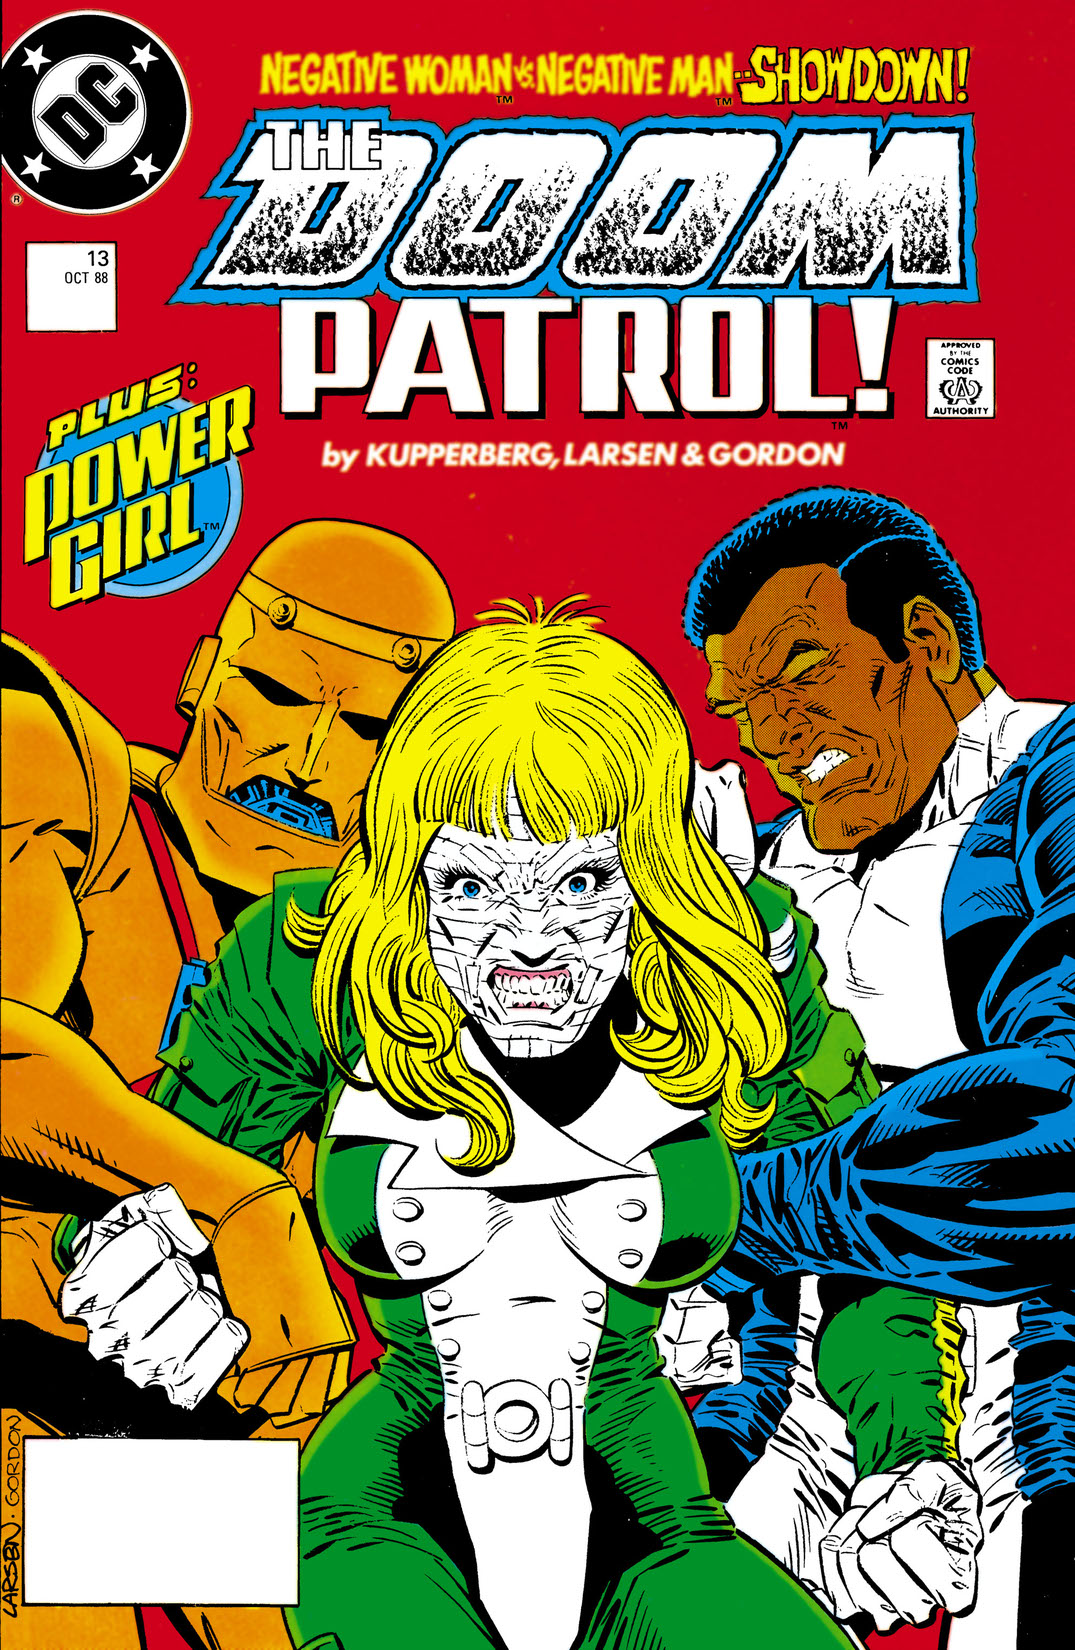 Doom Patrol (1987-) #13 preview images